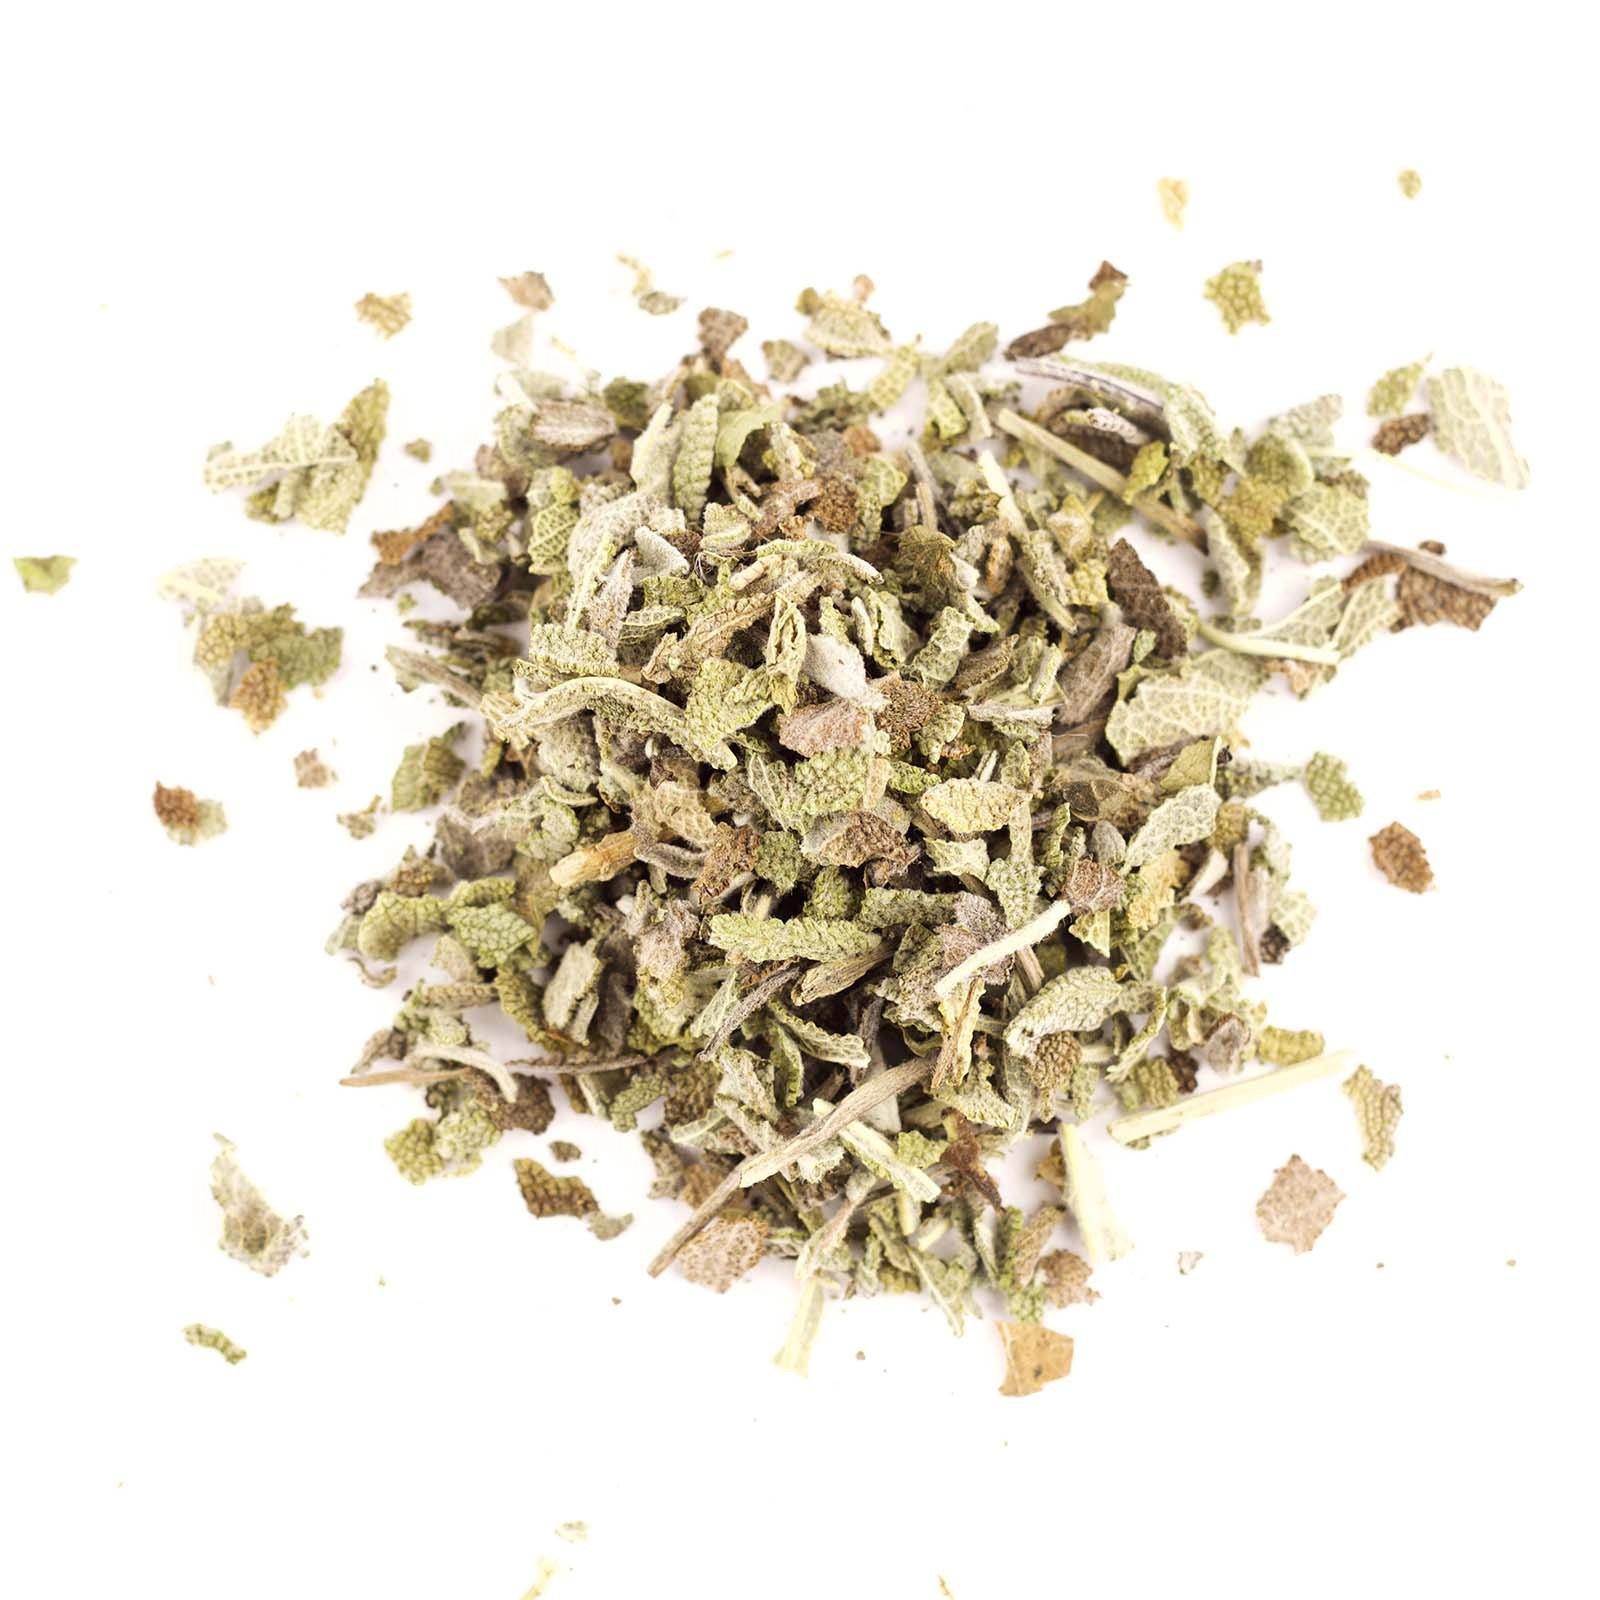 Sage Leaf (Rubbed) | Certified Organic Small Jar